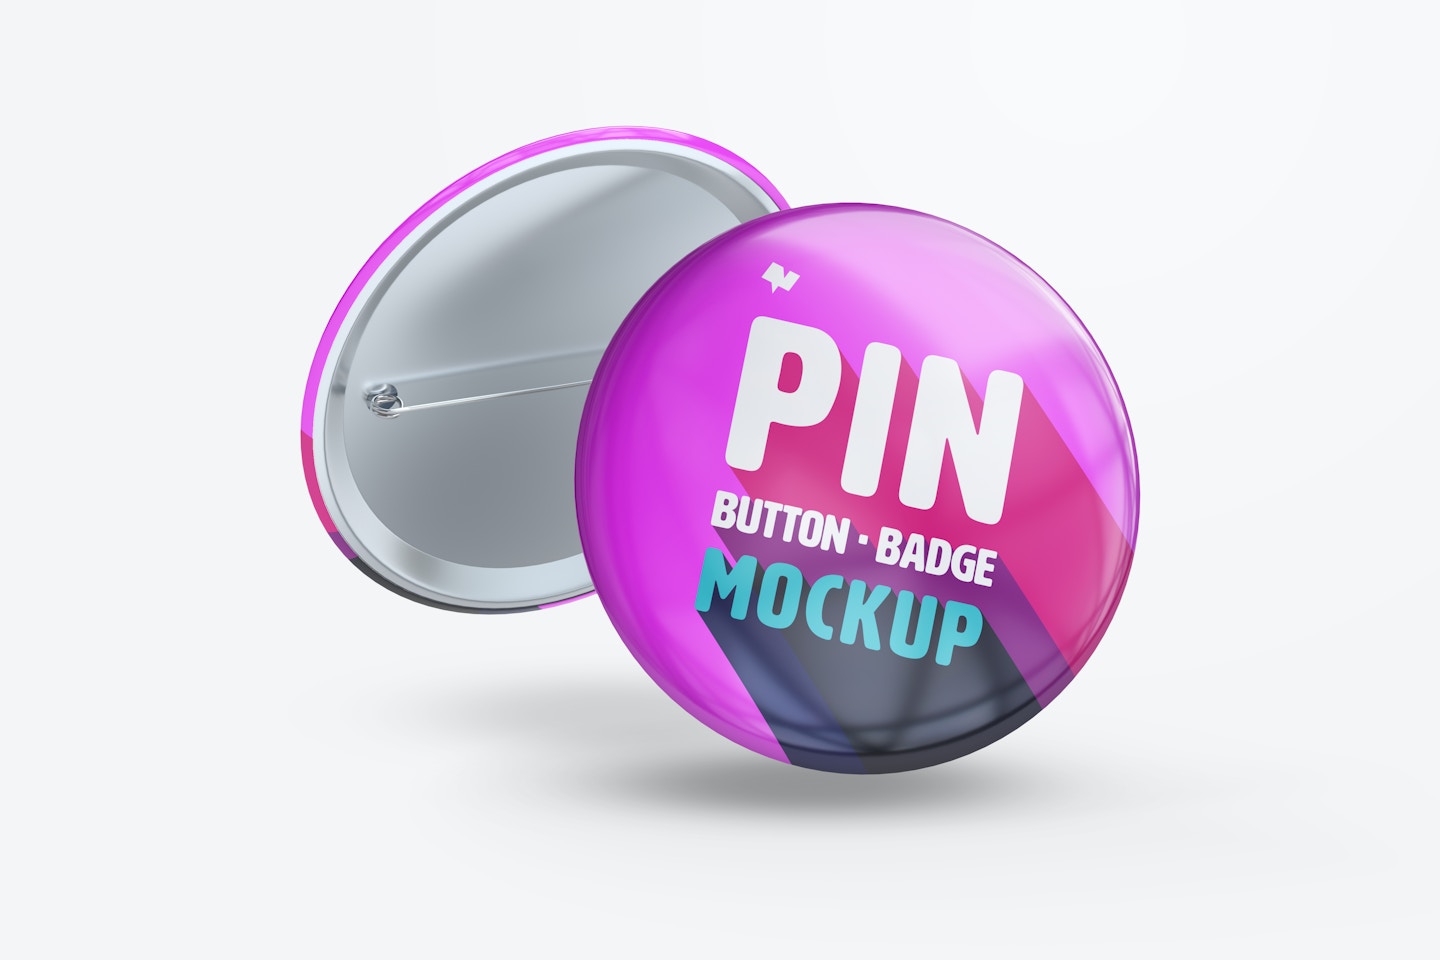 Pin Button Badges Mockup, Falling